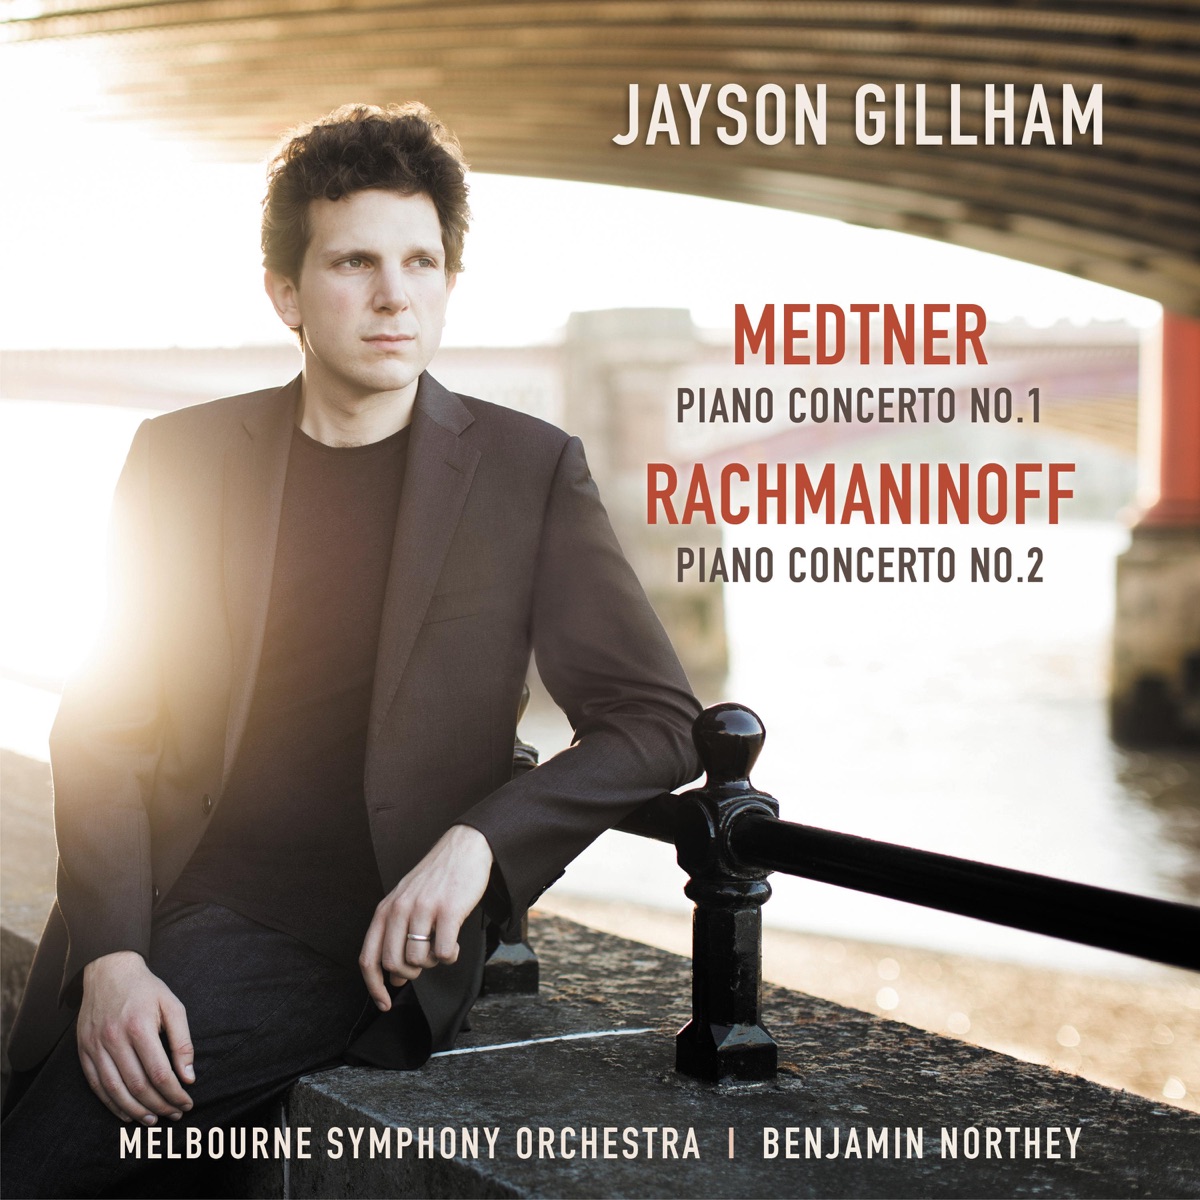 Rachmaninoff: Piano Concerto No. 2 / Medtner: Piano Concerto No. 1 - Album  by Benjamin Northey, The Melbourne Symphony Orchestra & Jayson Gillham -  Apple Music